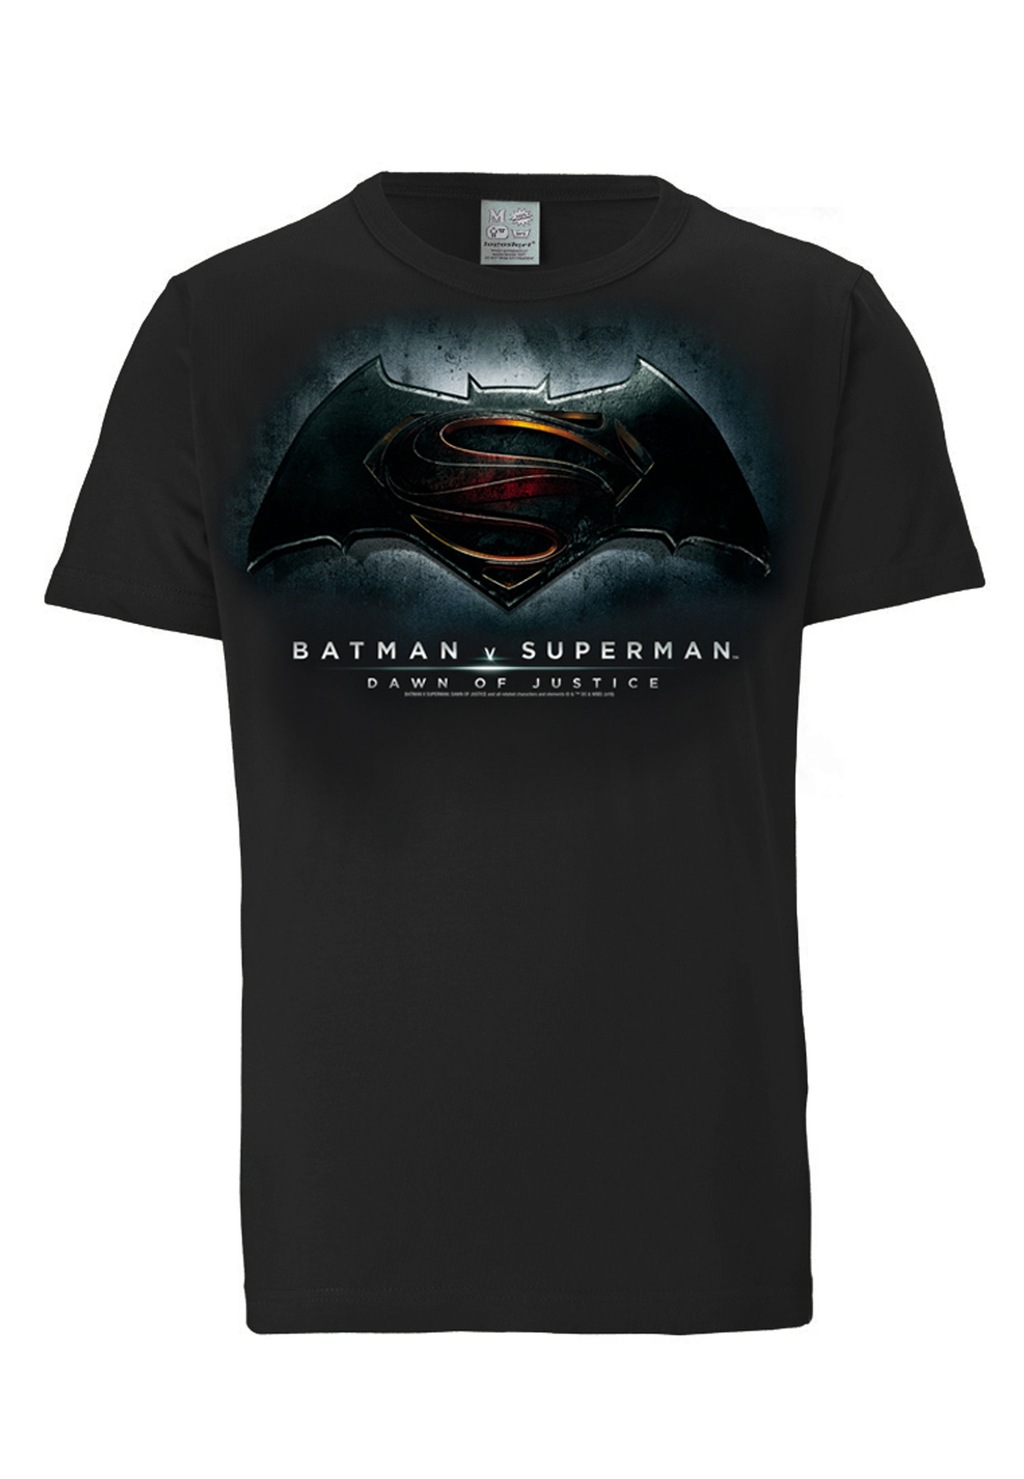 LOGOSHIRT T-Shirt "Batman v Superman - Justice", mit großem Superhelden-Pri günstig online kaufen